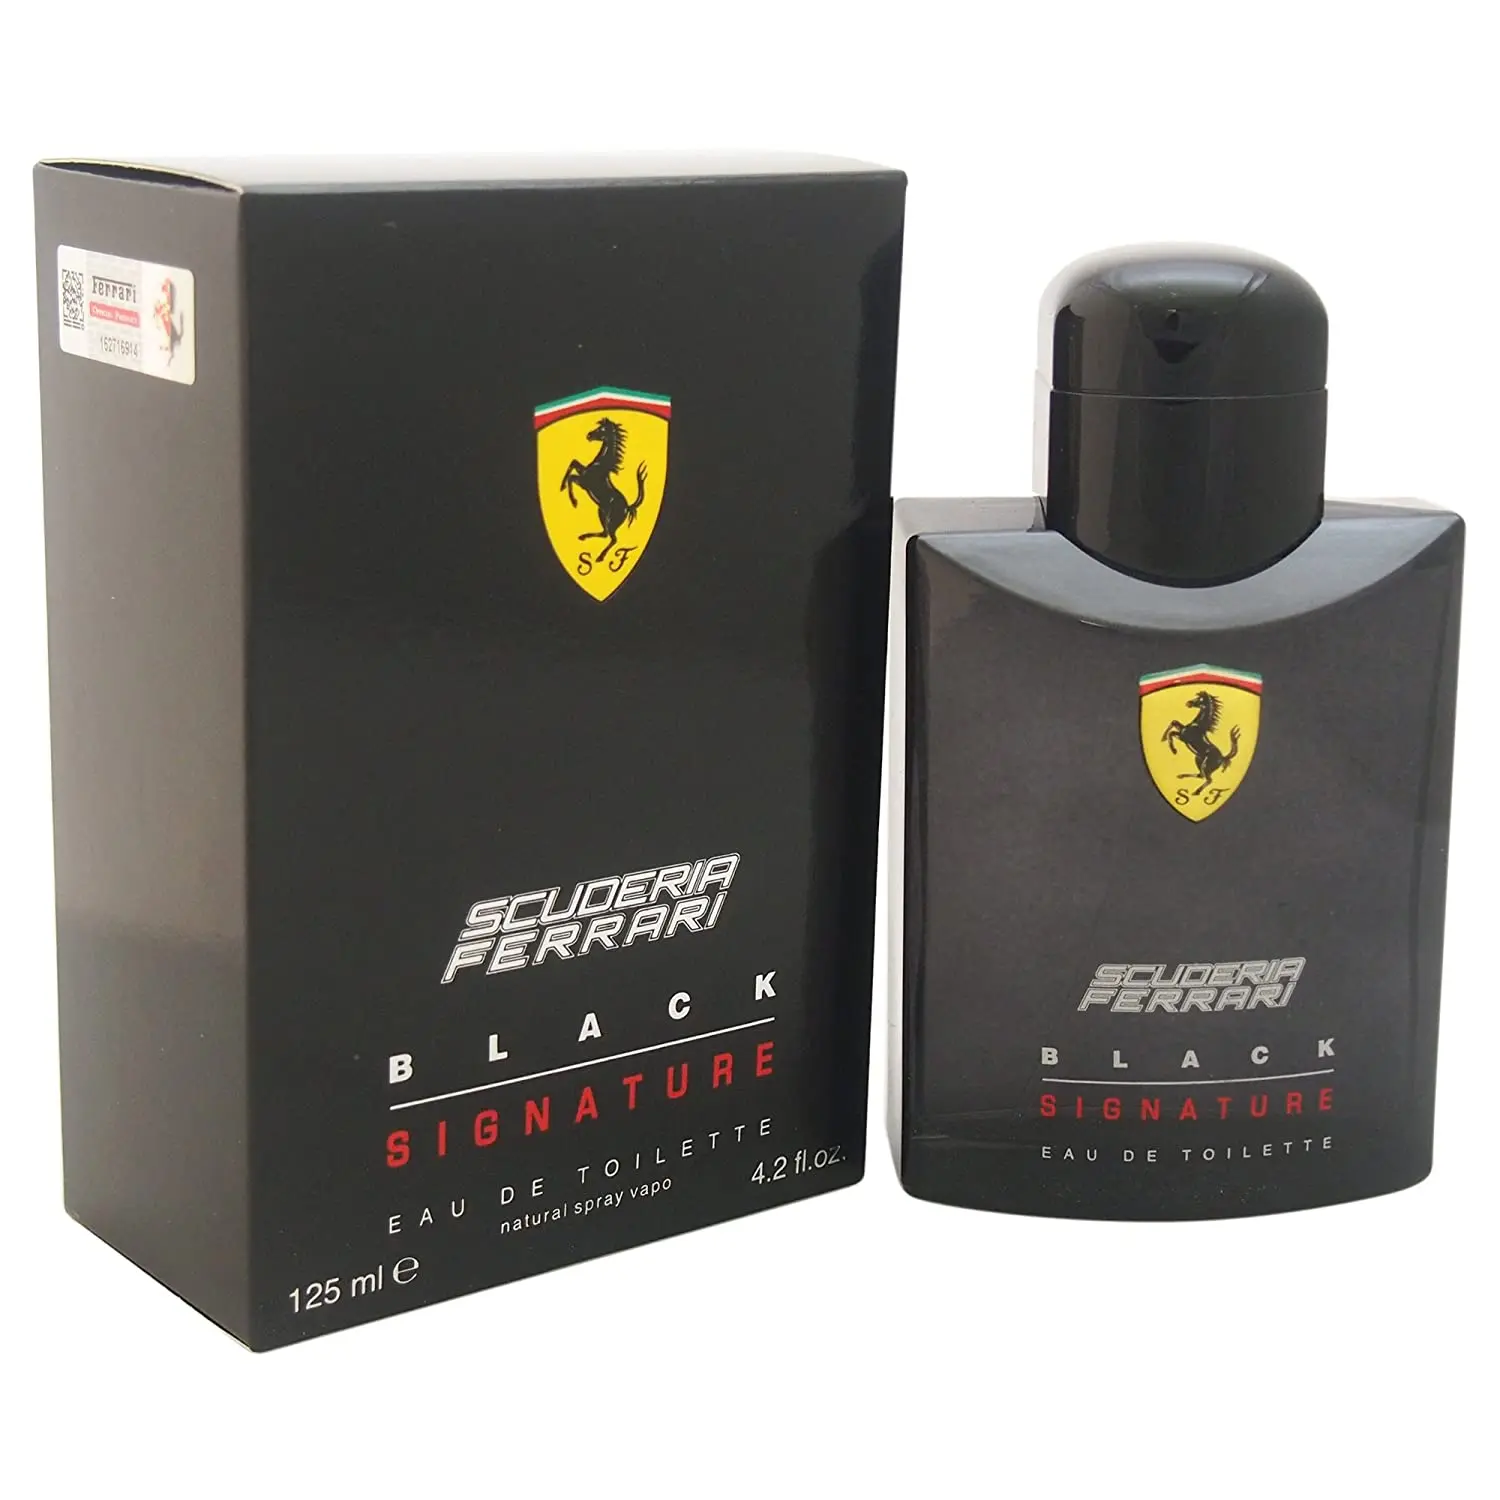 ferrari black signature perfume price in pakistan - What is the price of yellow Ferrari perfume in Pakistan